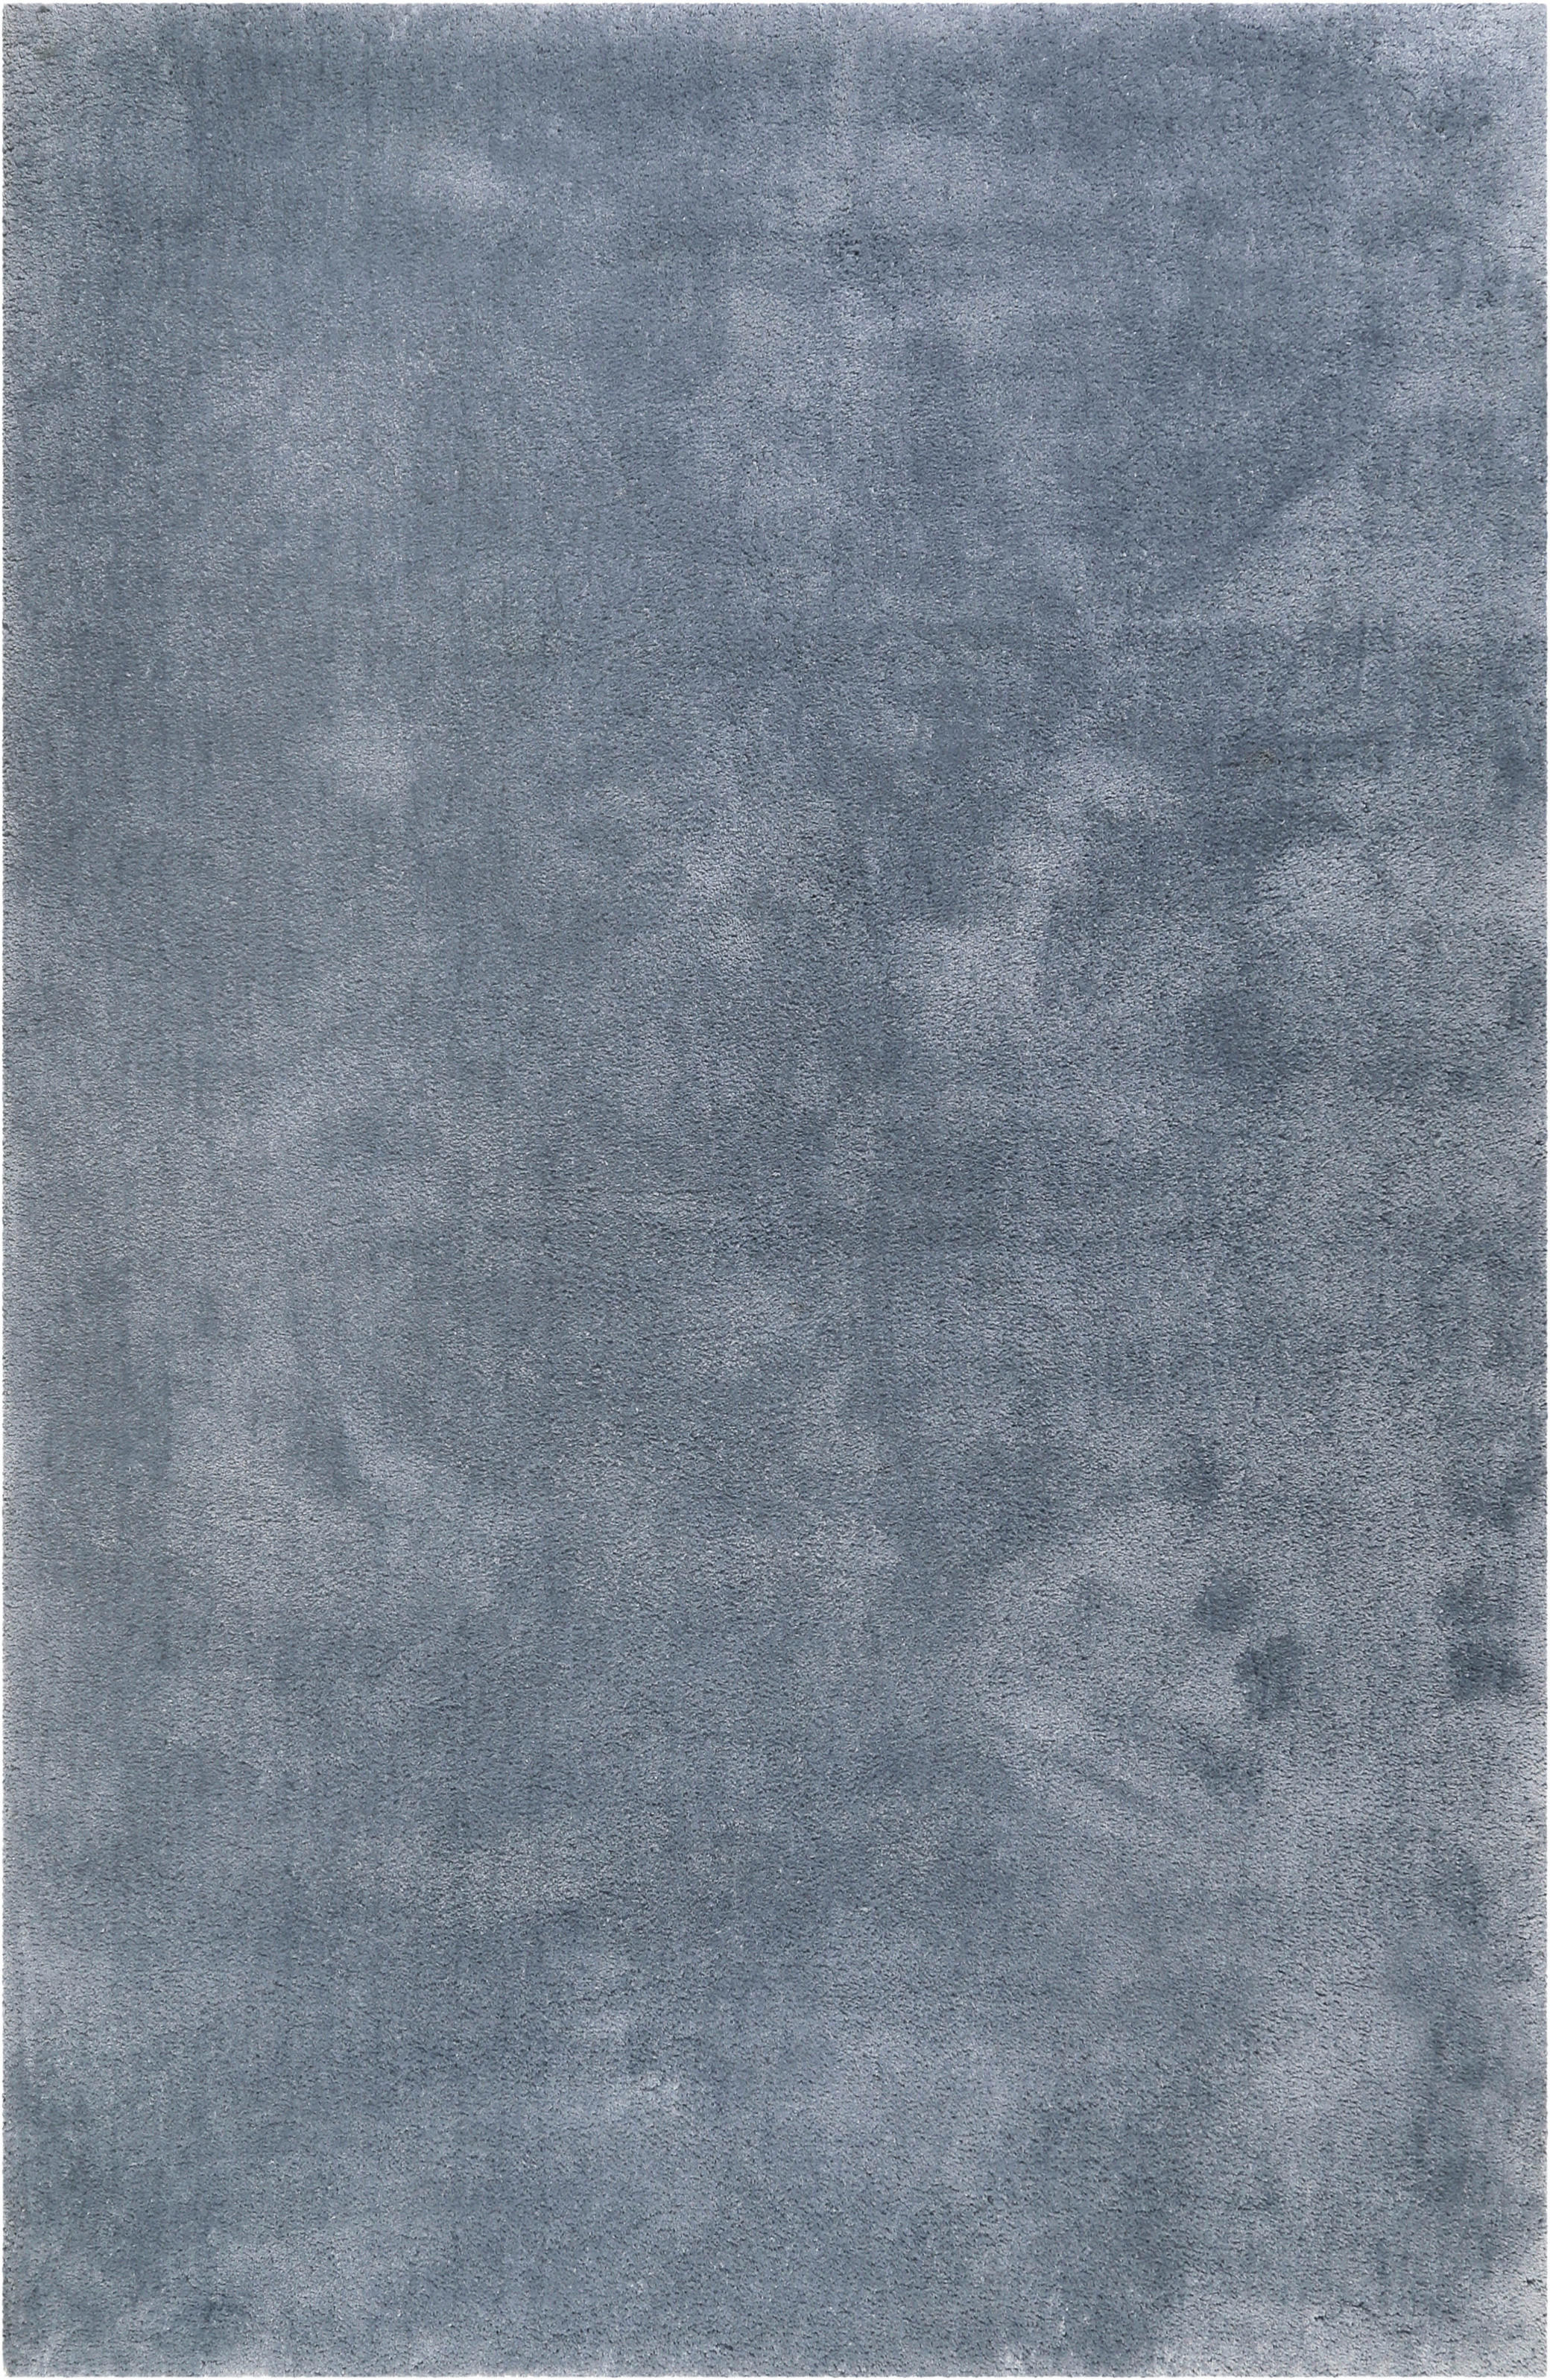 HOCHFLORTEPPICH 80/150 cm Relaxx  - Blau/Grau, Basics, Textil (80/150cm) - Esprit